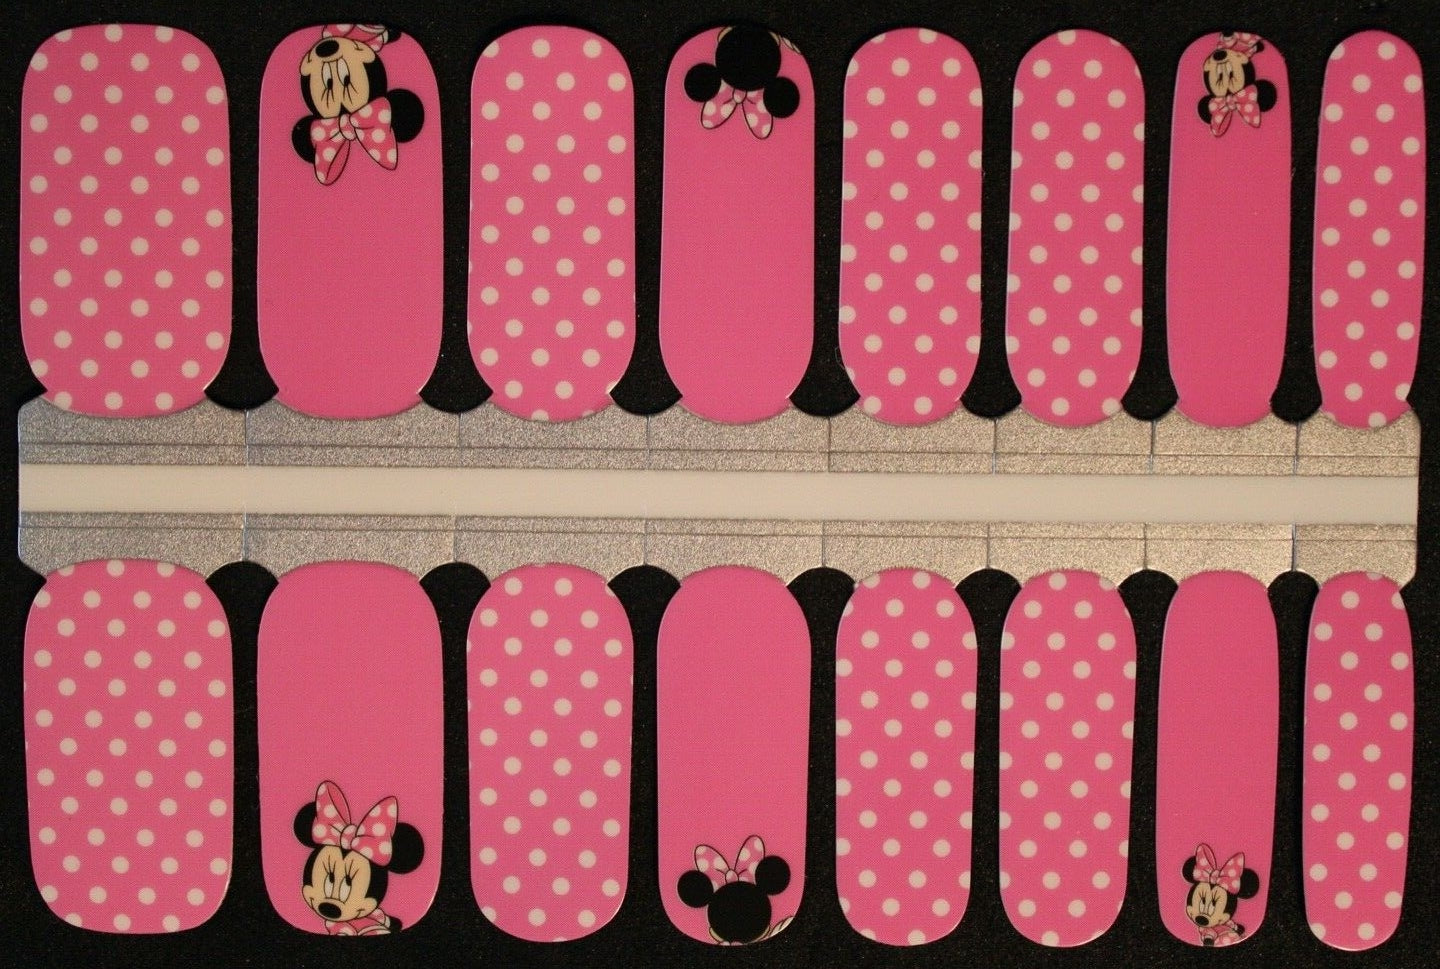 Pink and white polka dot nail wraps strips